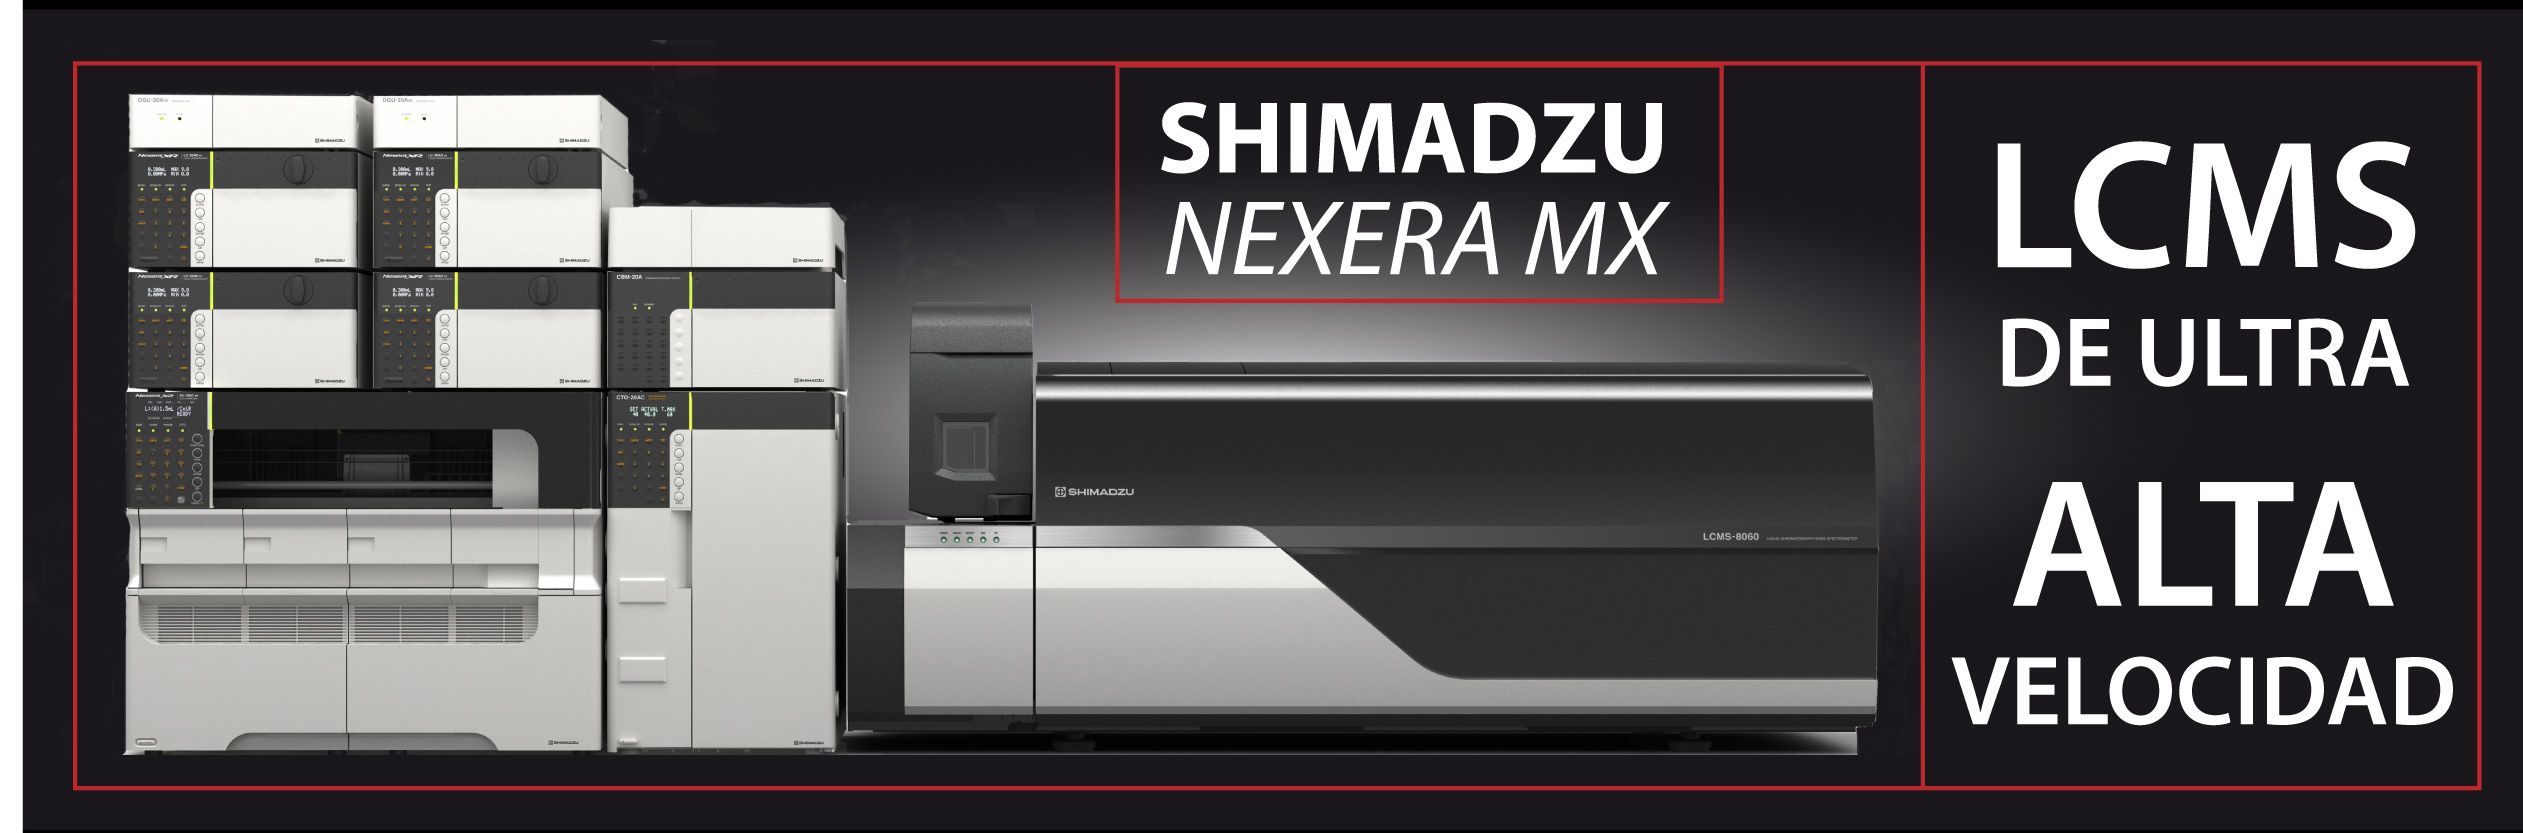 Shimadzu lanza el sistema LCMS de ultra-alta velocidad Nexera MX